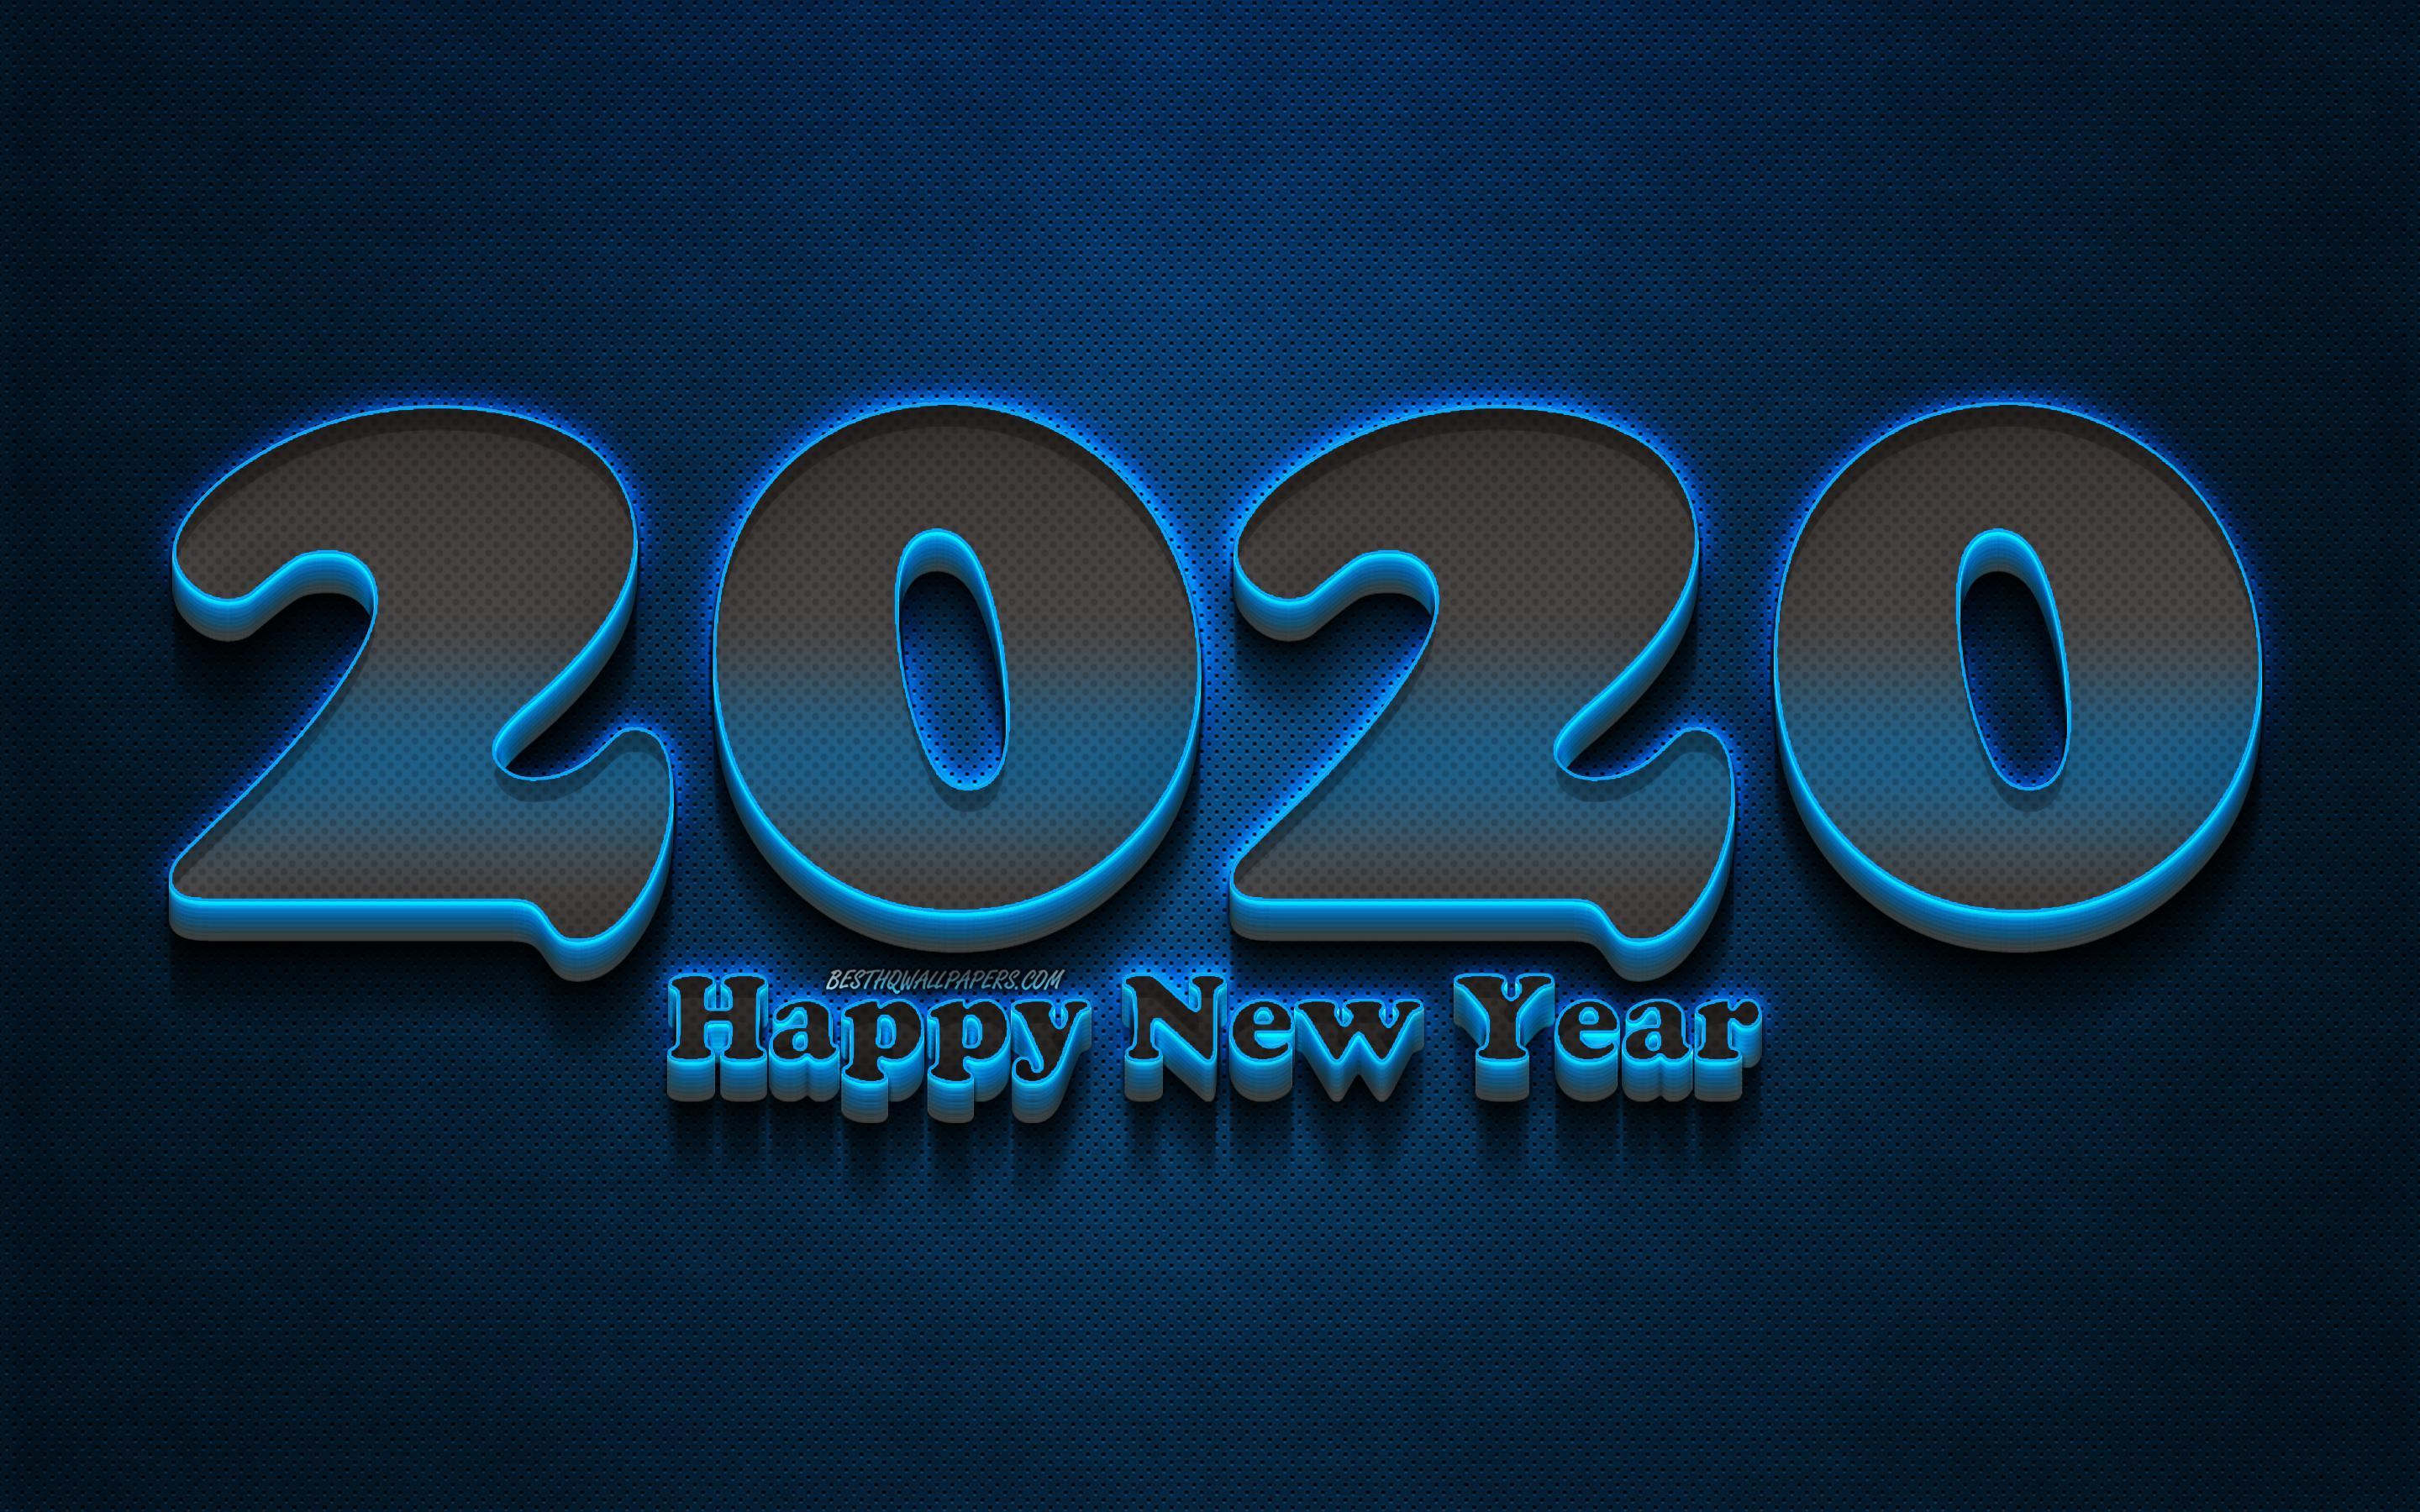 Download wallpaper 2020 blue 3D digits, grunge, Happy New